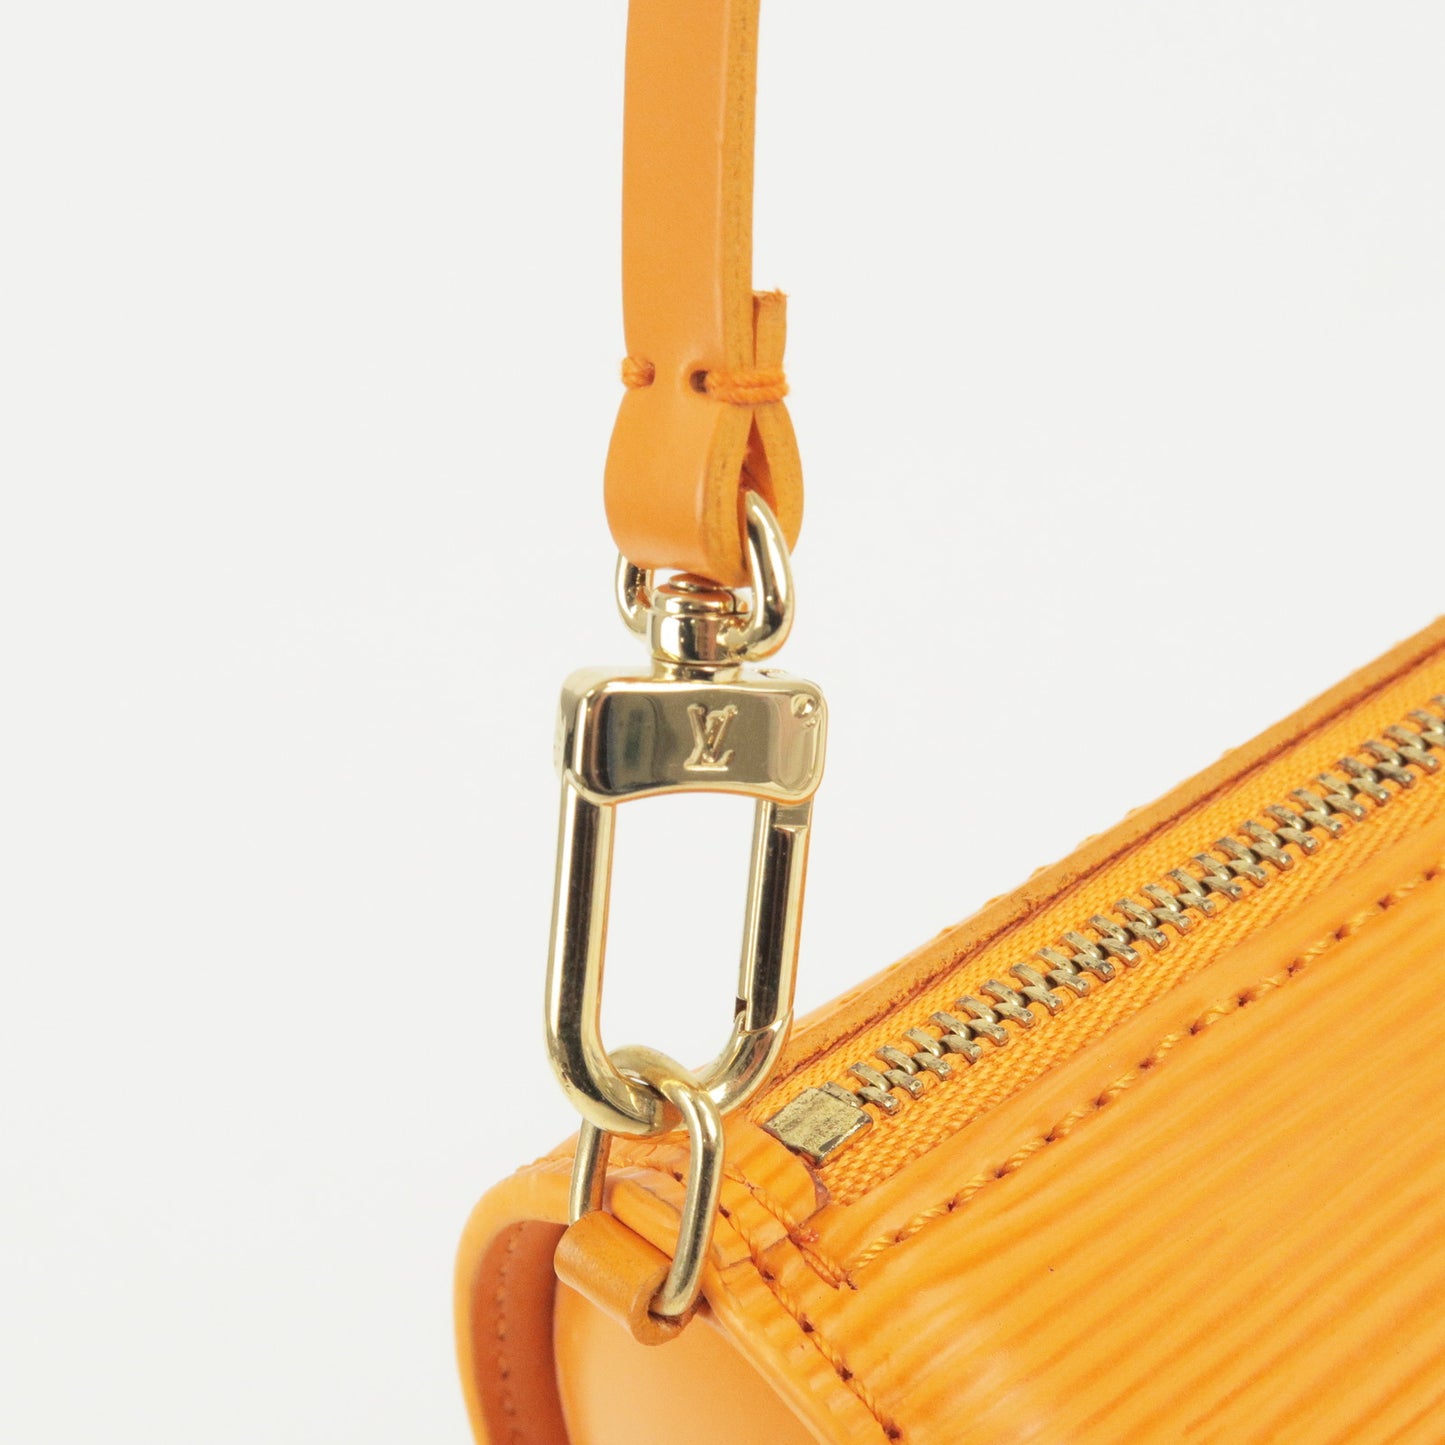 Louis Vuitton Epi Pouch For Soufflot Hand Bag Mandarin Orange